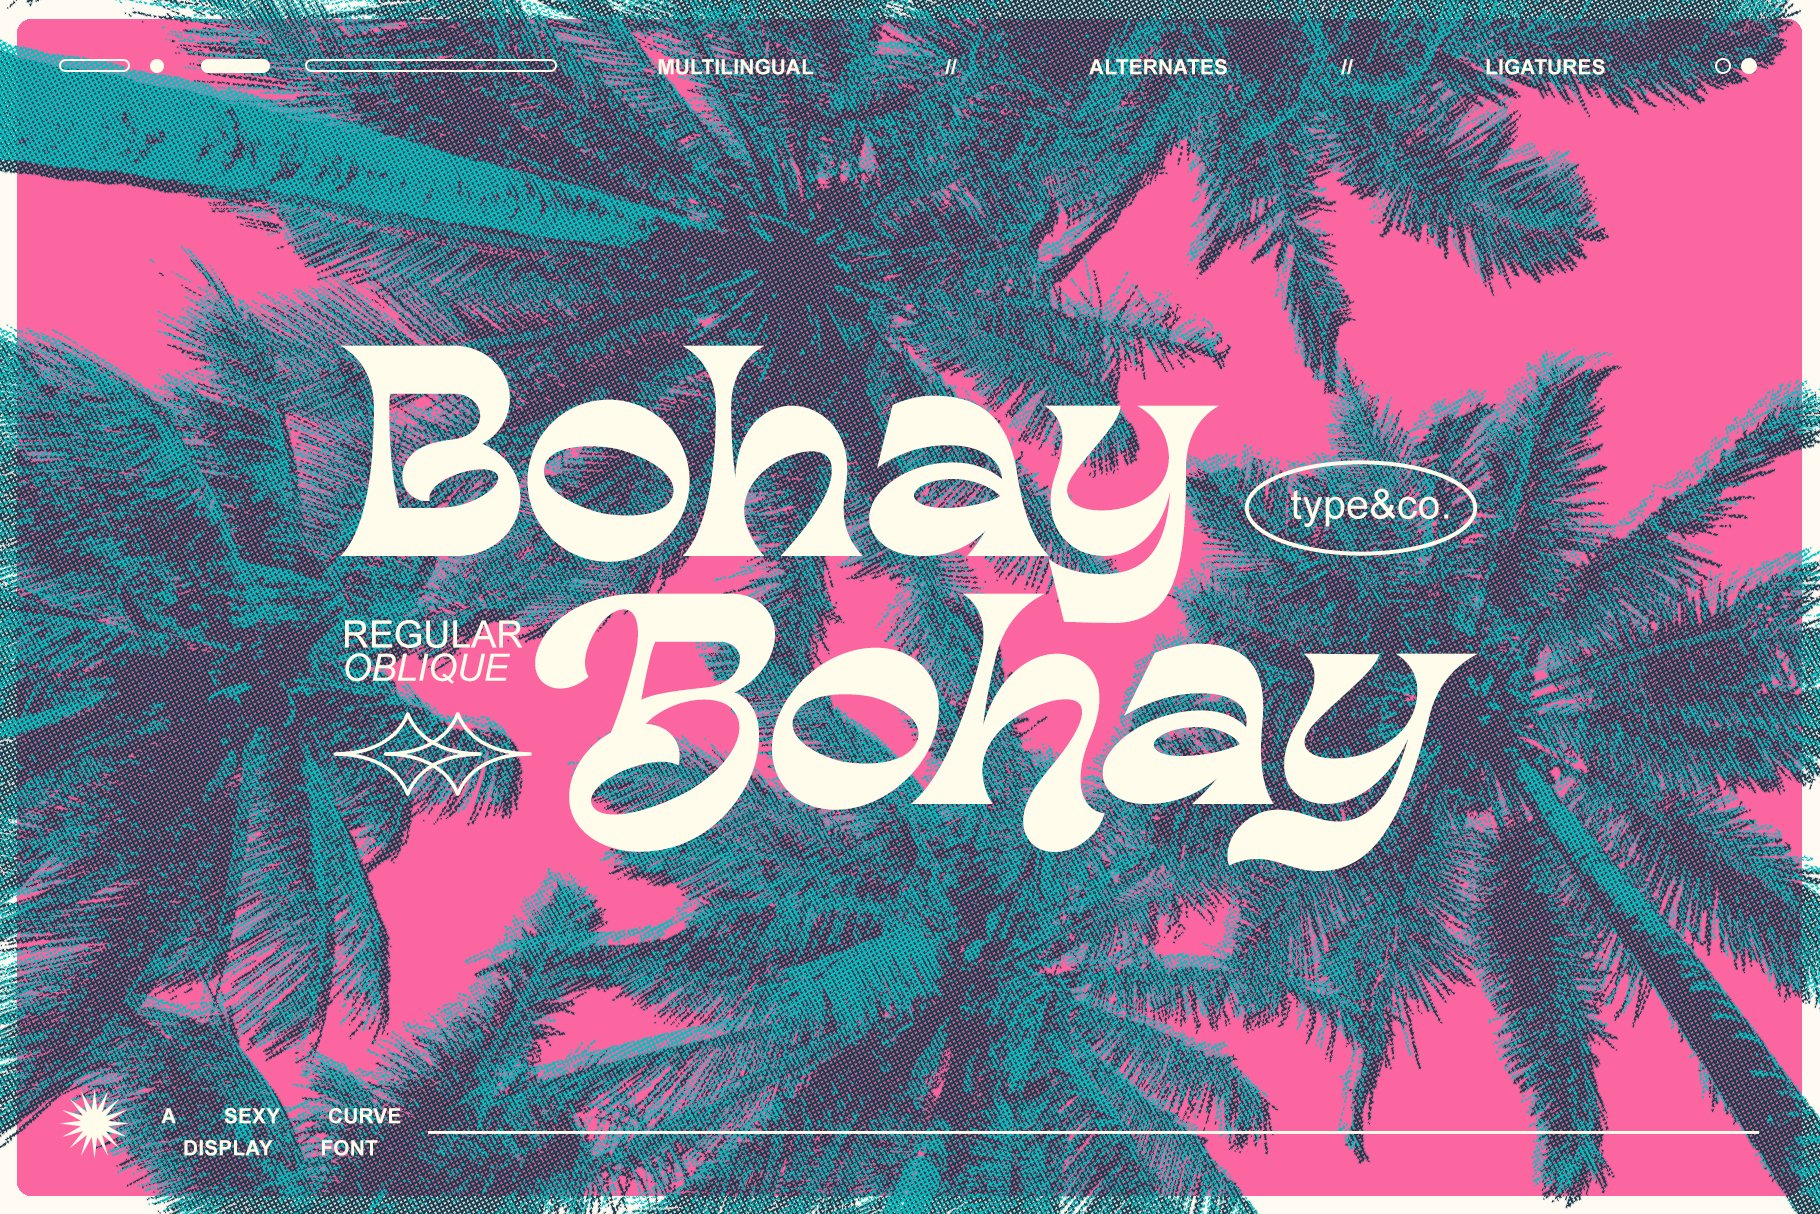 Bohay - A Curvy Display Font cover image.